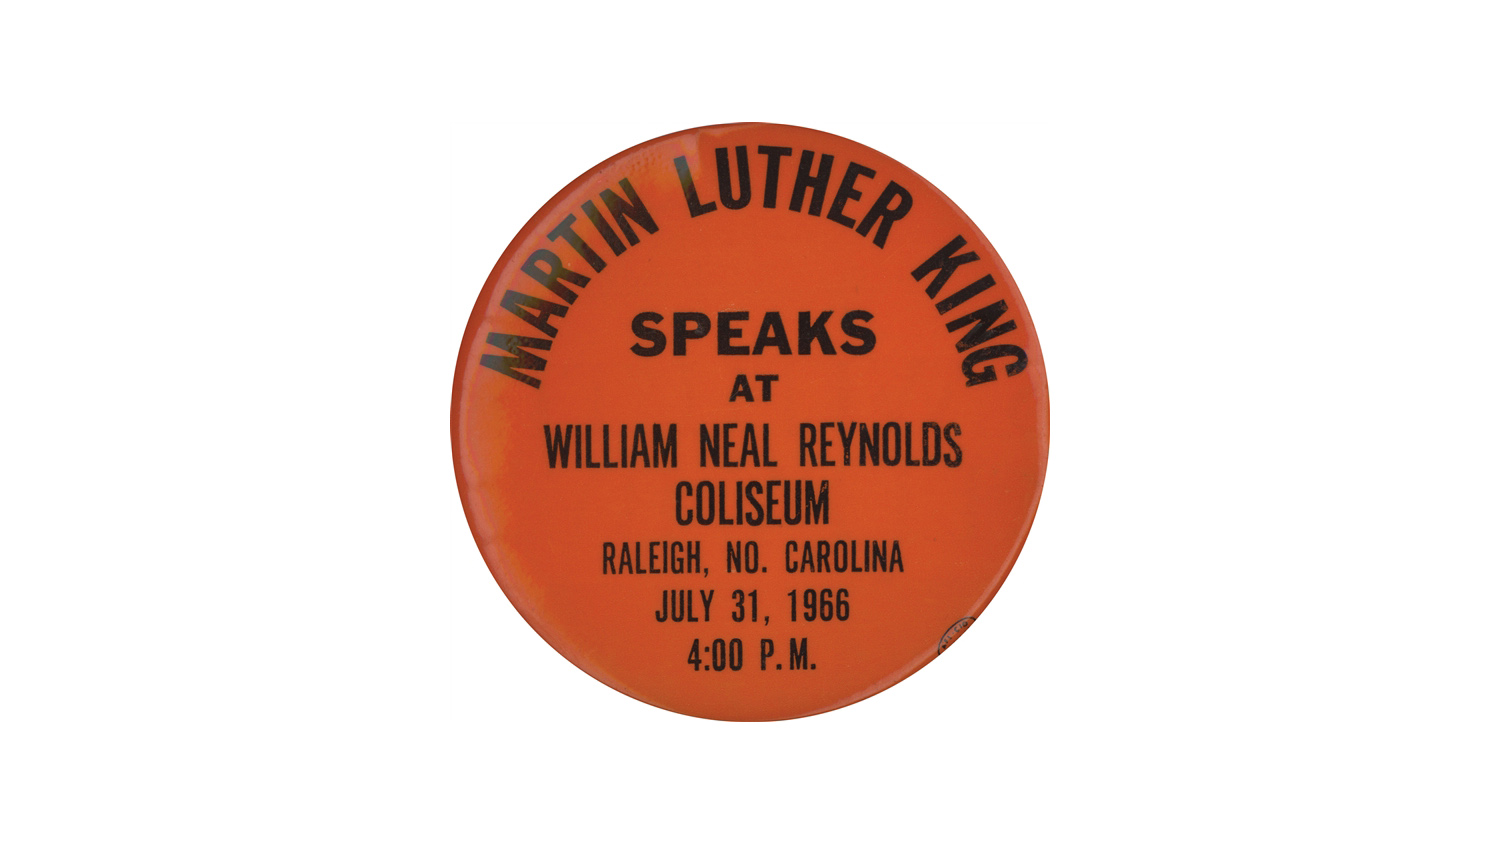 MLK event pin